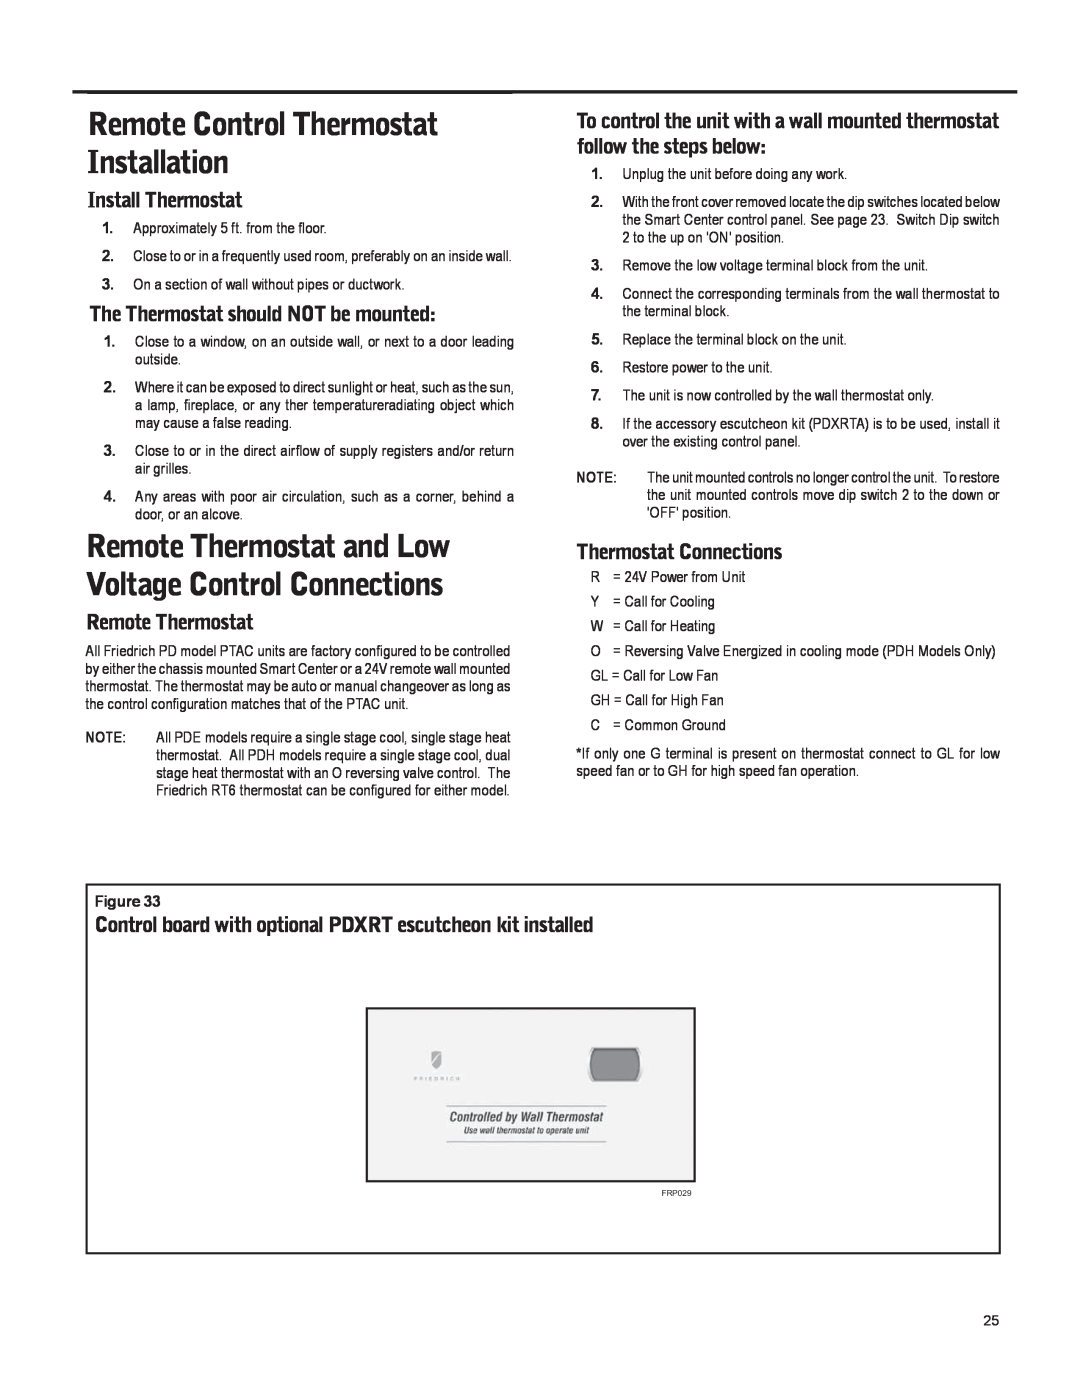 Friedrich 920-087-09 (12/10) operation manual Remote Control Thermostat Installation, Install Thermostat, Remote Thermostat 